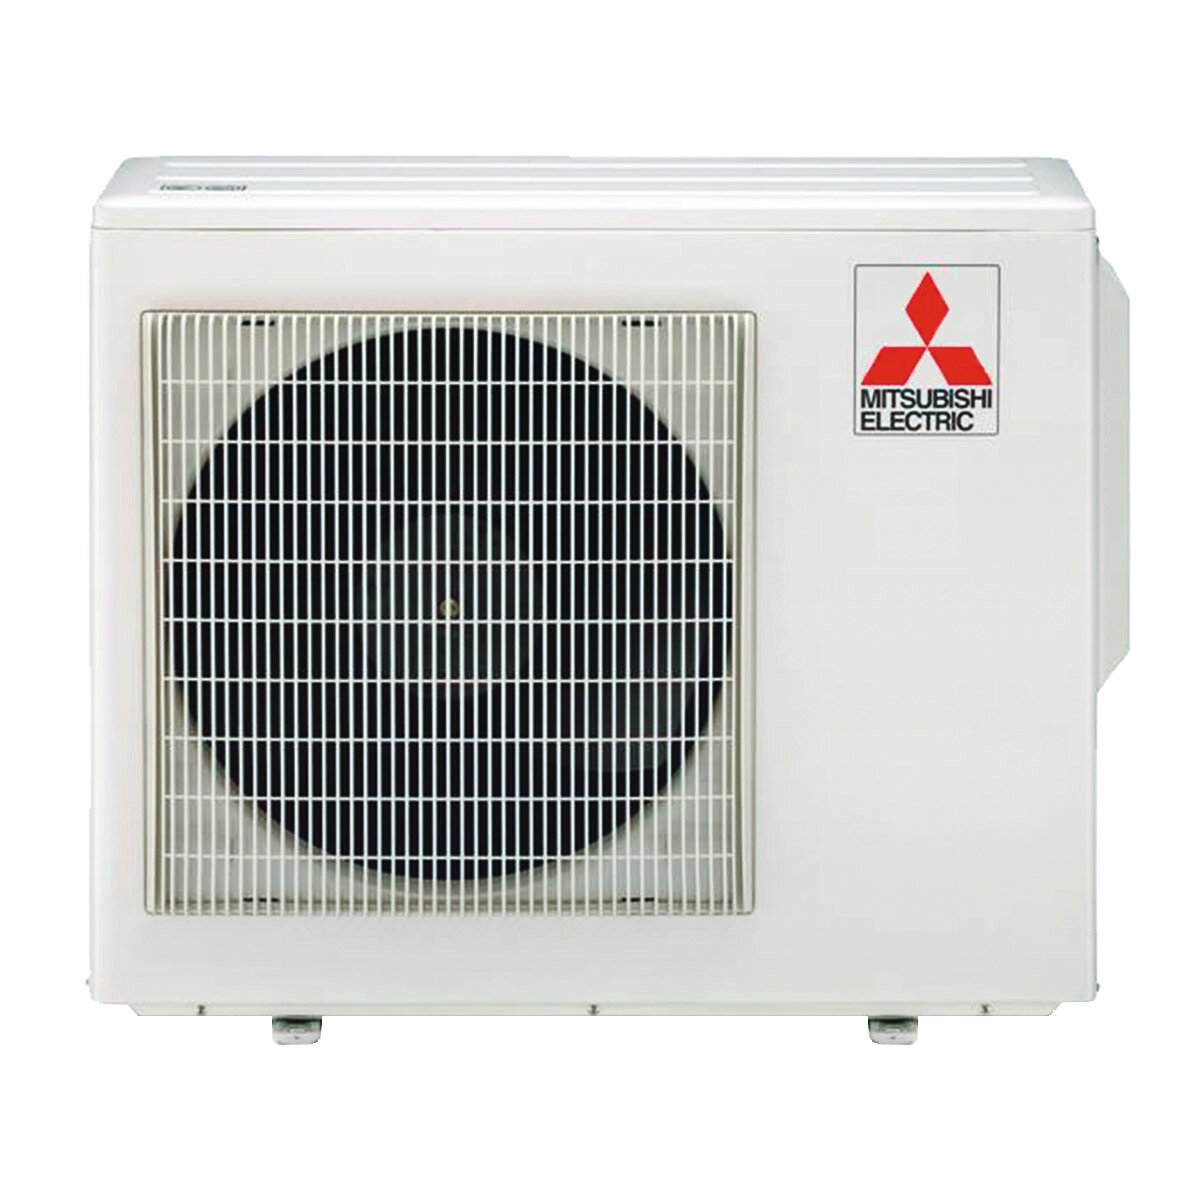 Mitsubishi Electric air conditioner AY Series dual split 12000+18000 BTU inverter A++ wifi outdoor unit 5.4 kW